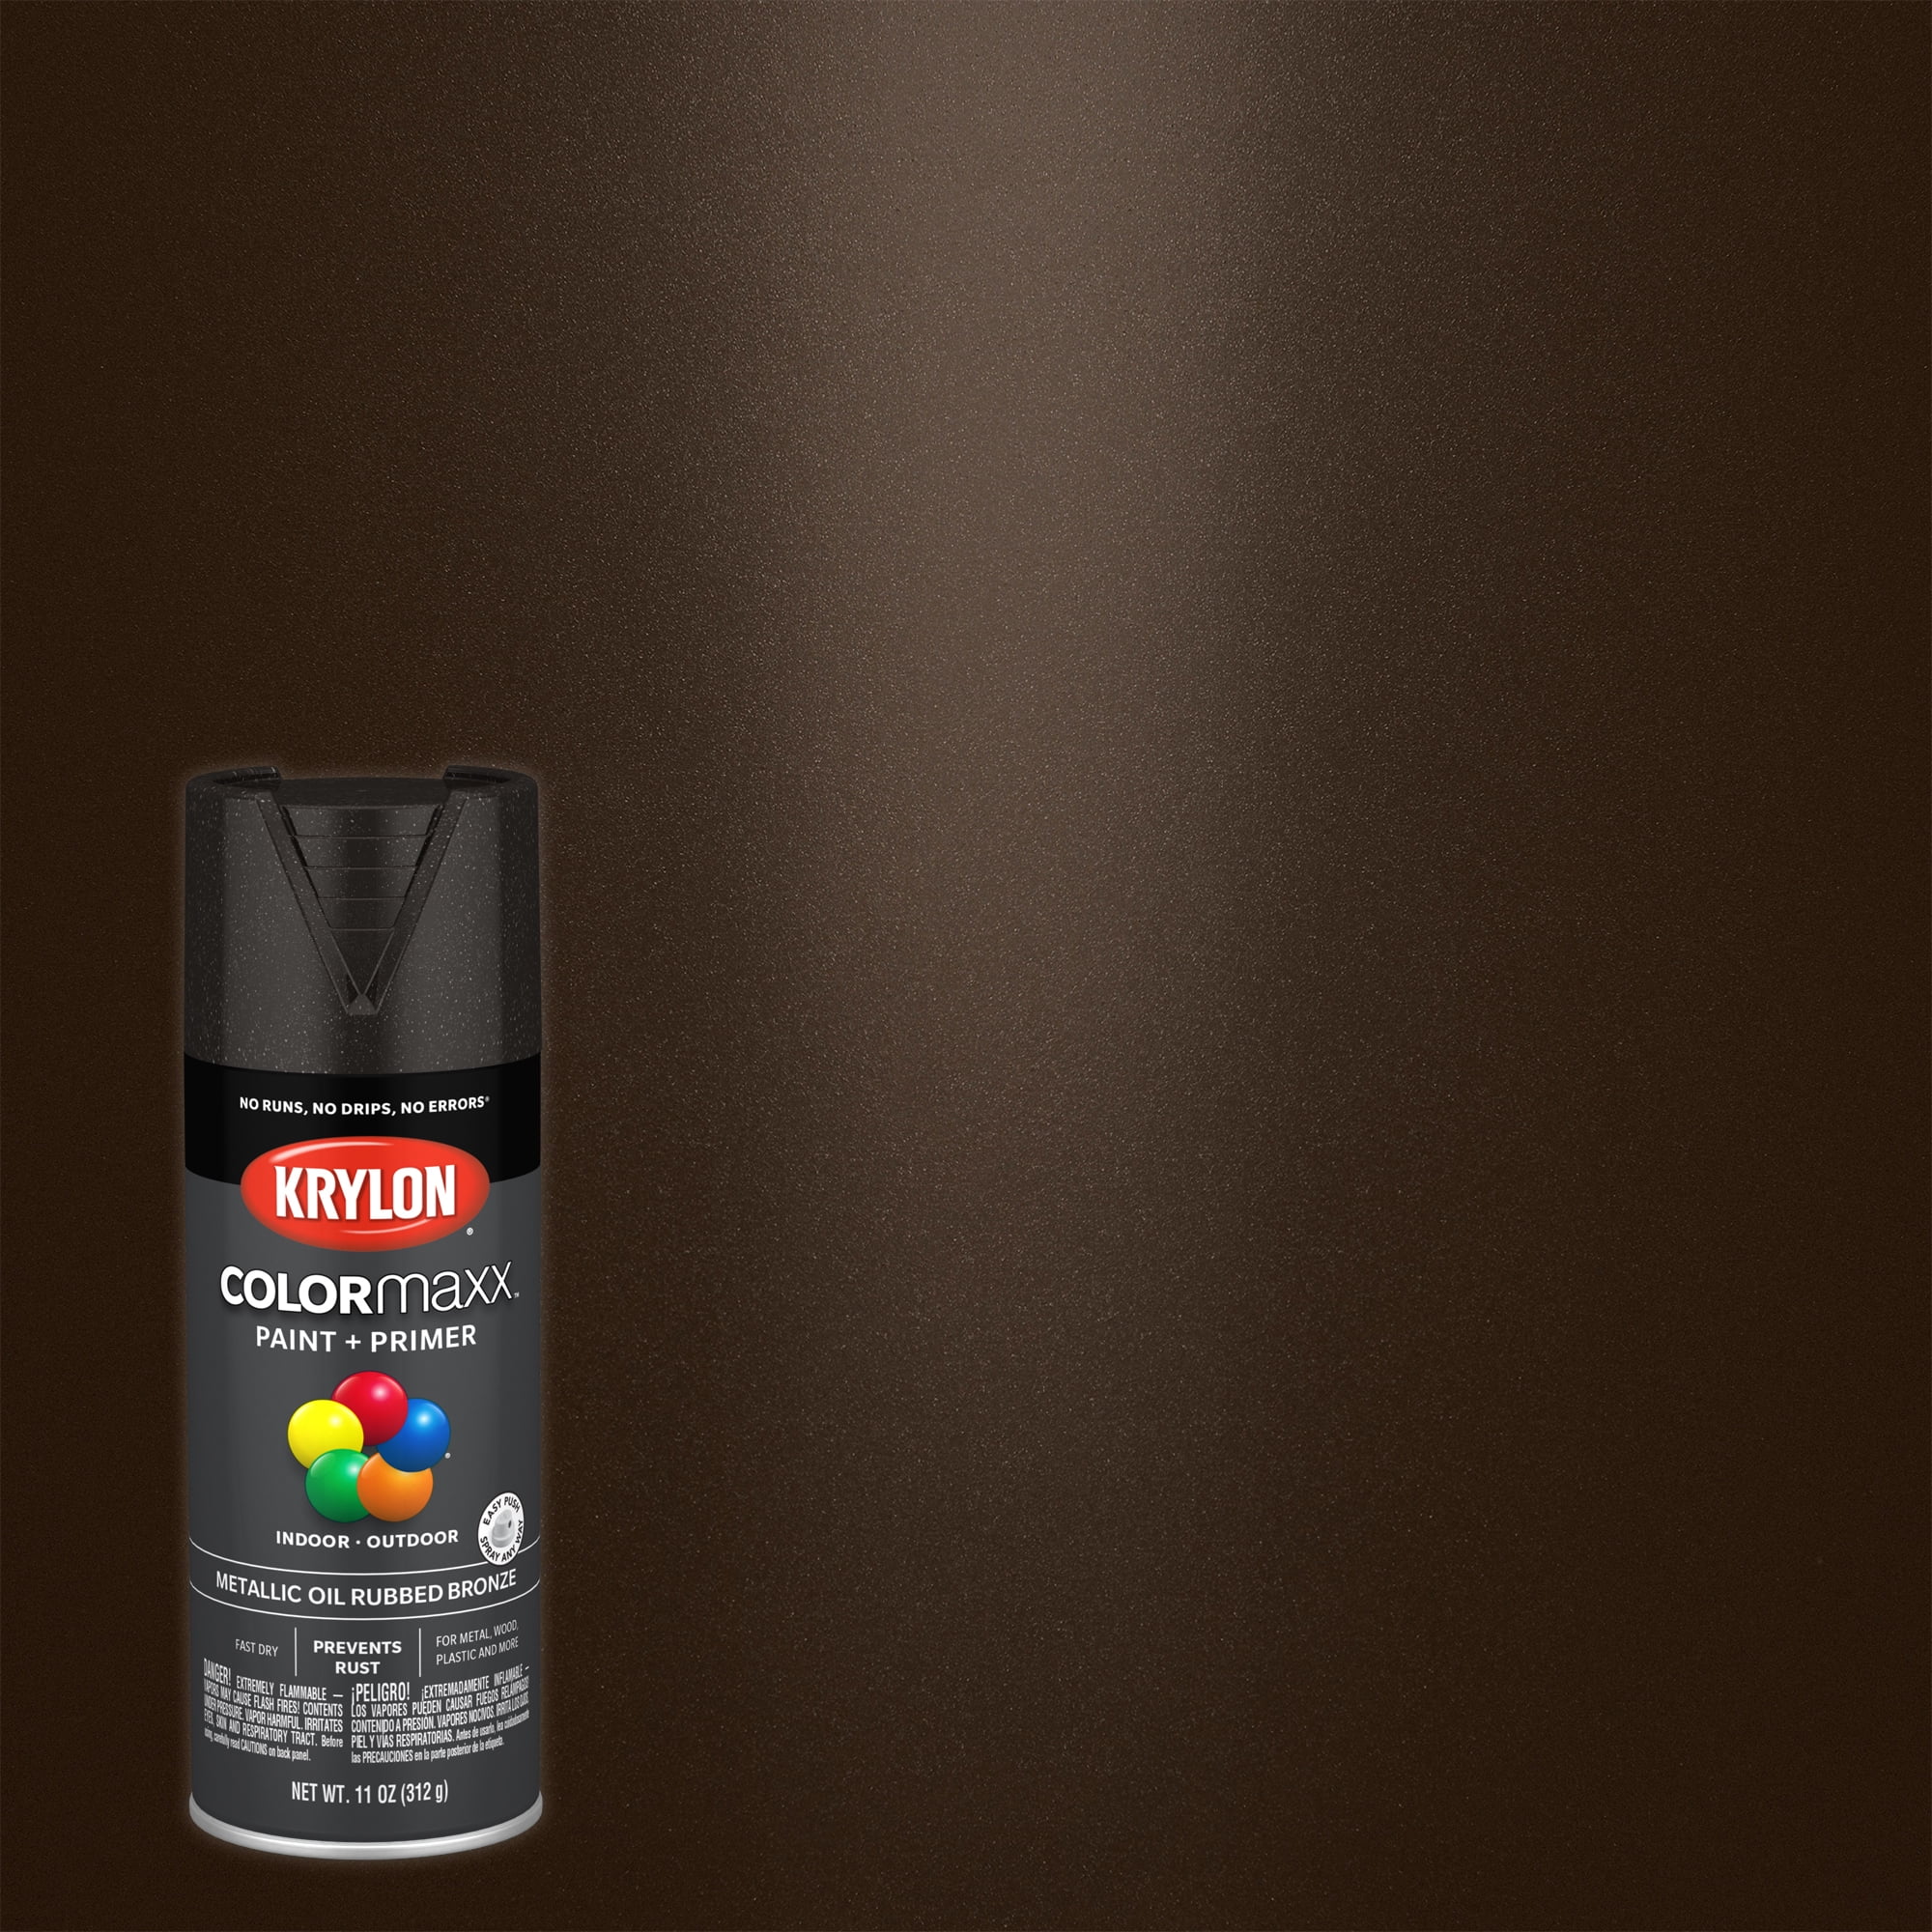 Krylon ColorMaxx Spray Paint + Primer, Metallic Oil-Rubbed Bronze, 11 Oz.  Can